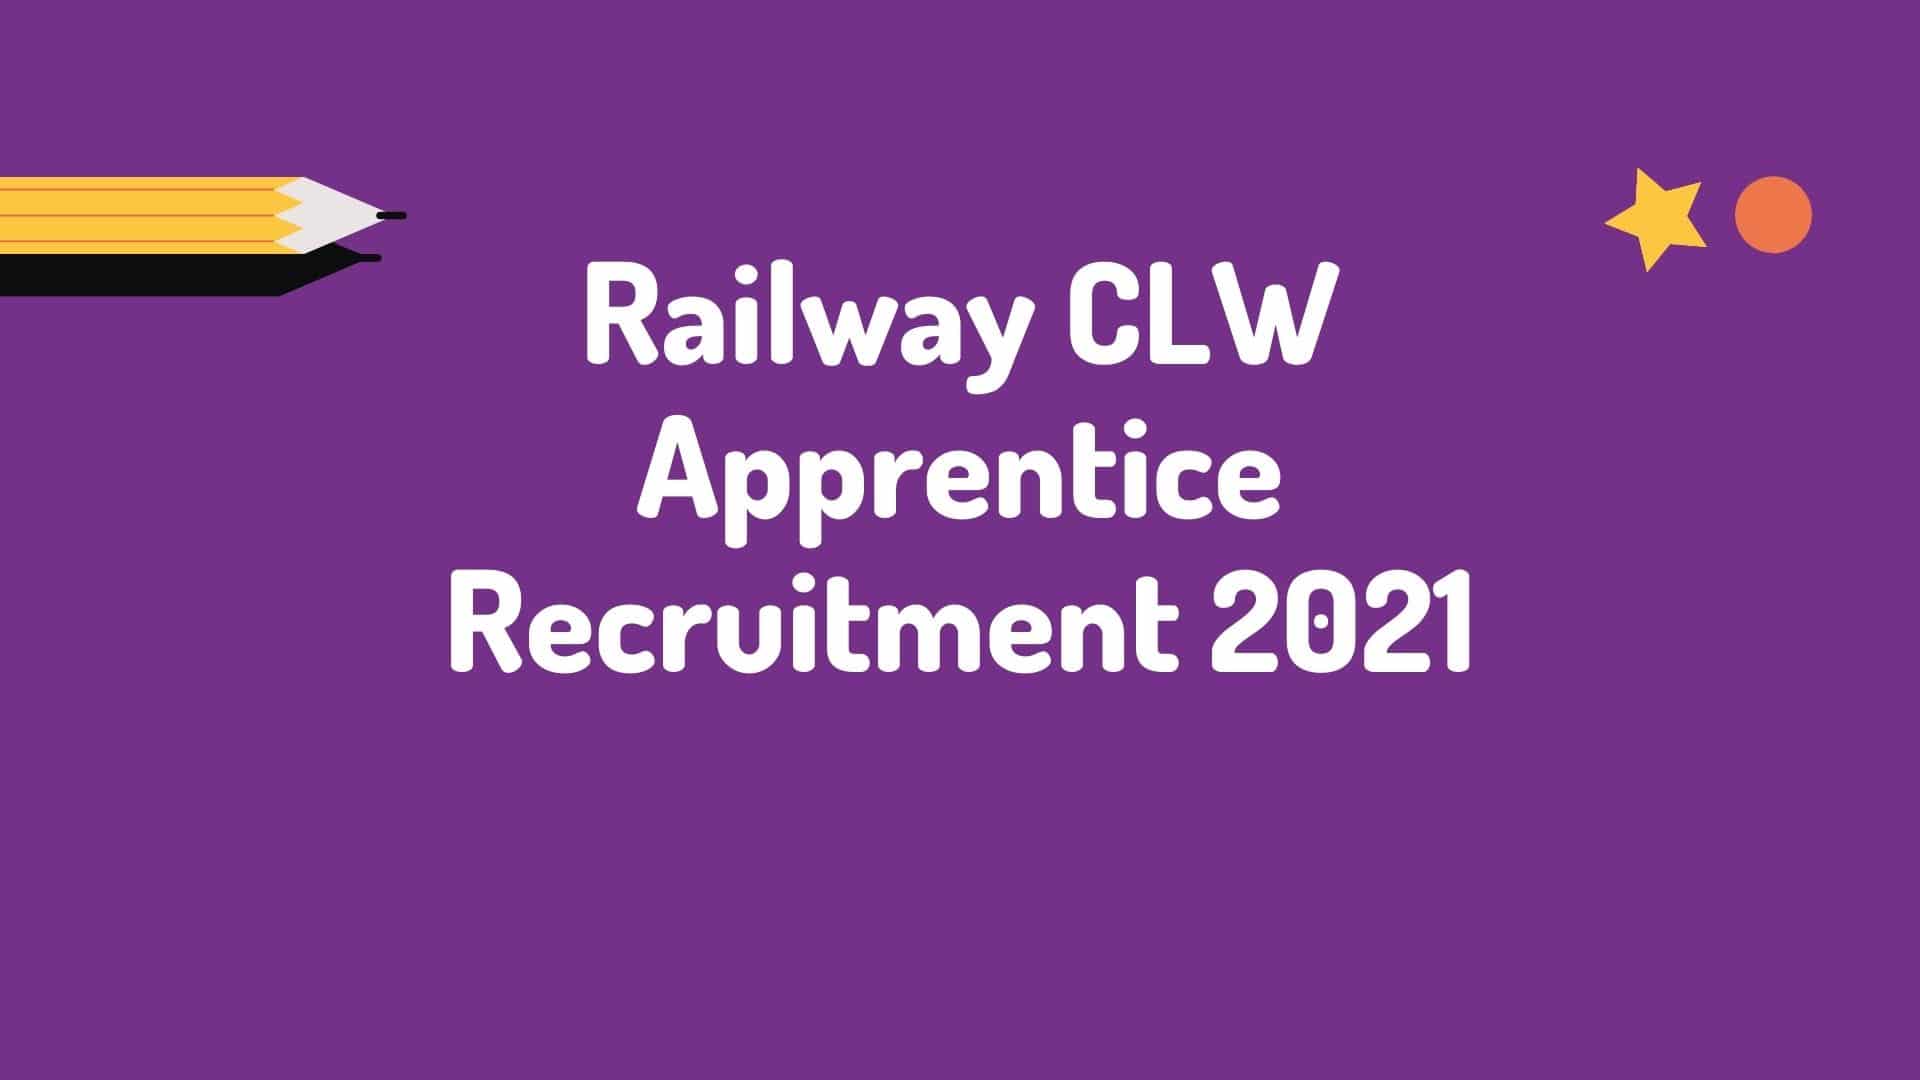 Railway CLW Apprentice Recruitment 2021